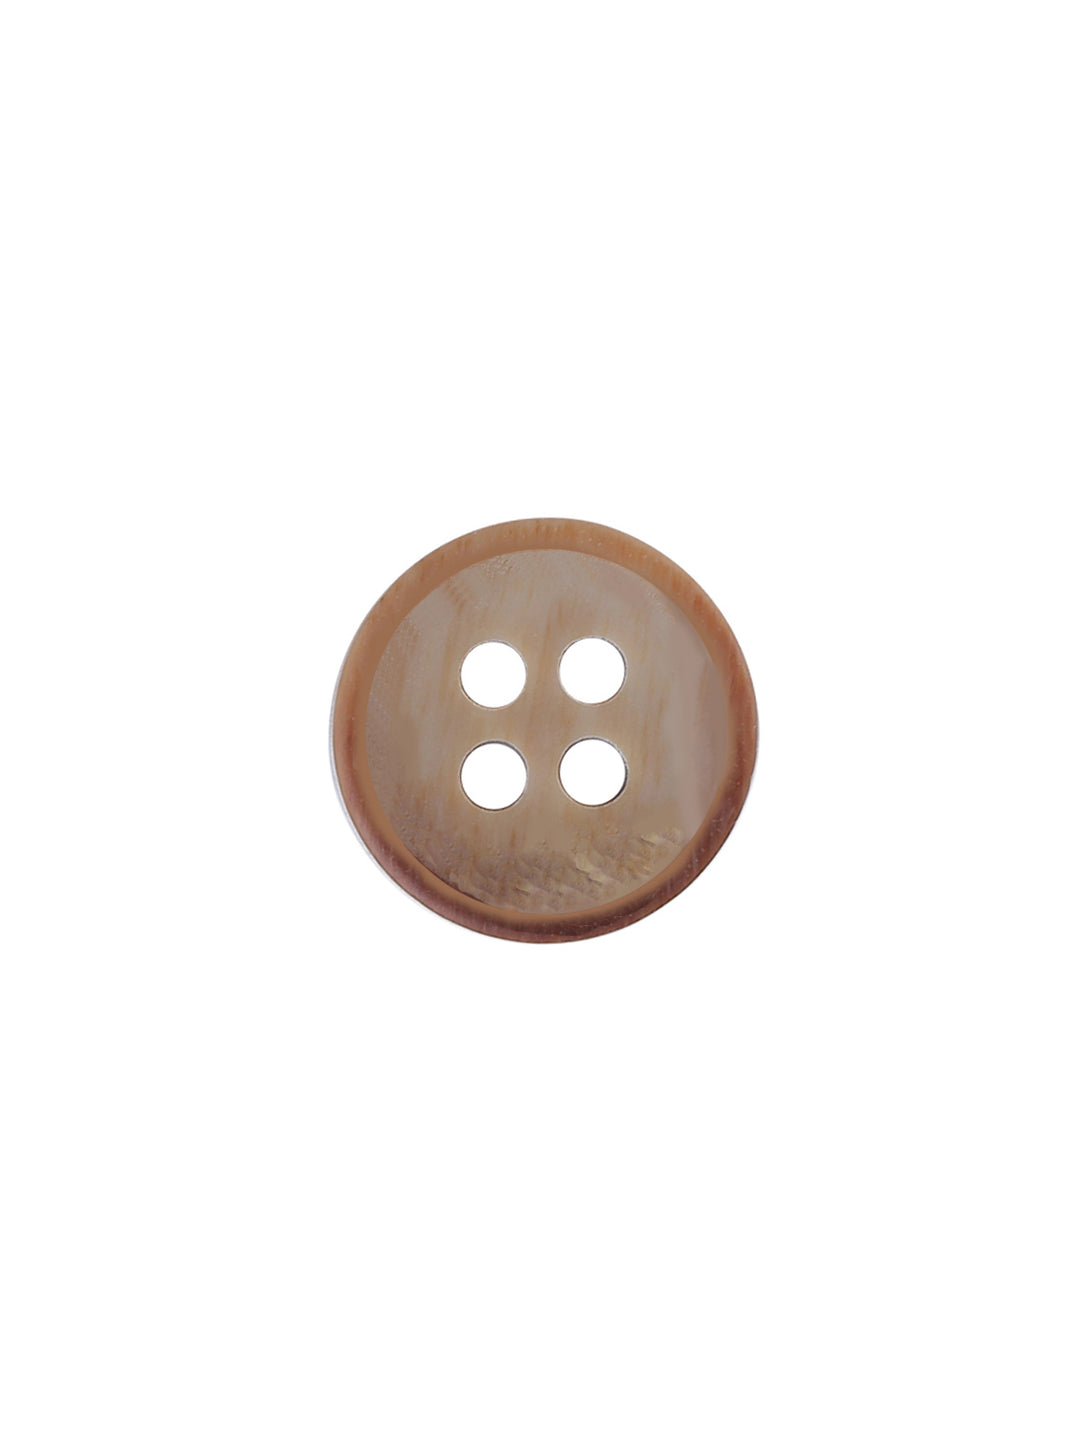 Dual Tone Wooden Brown Color Round Shape Shirt Button